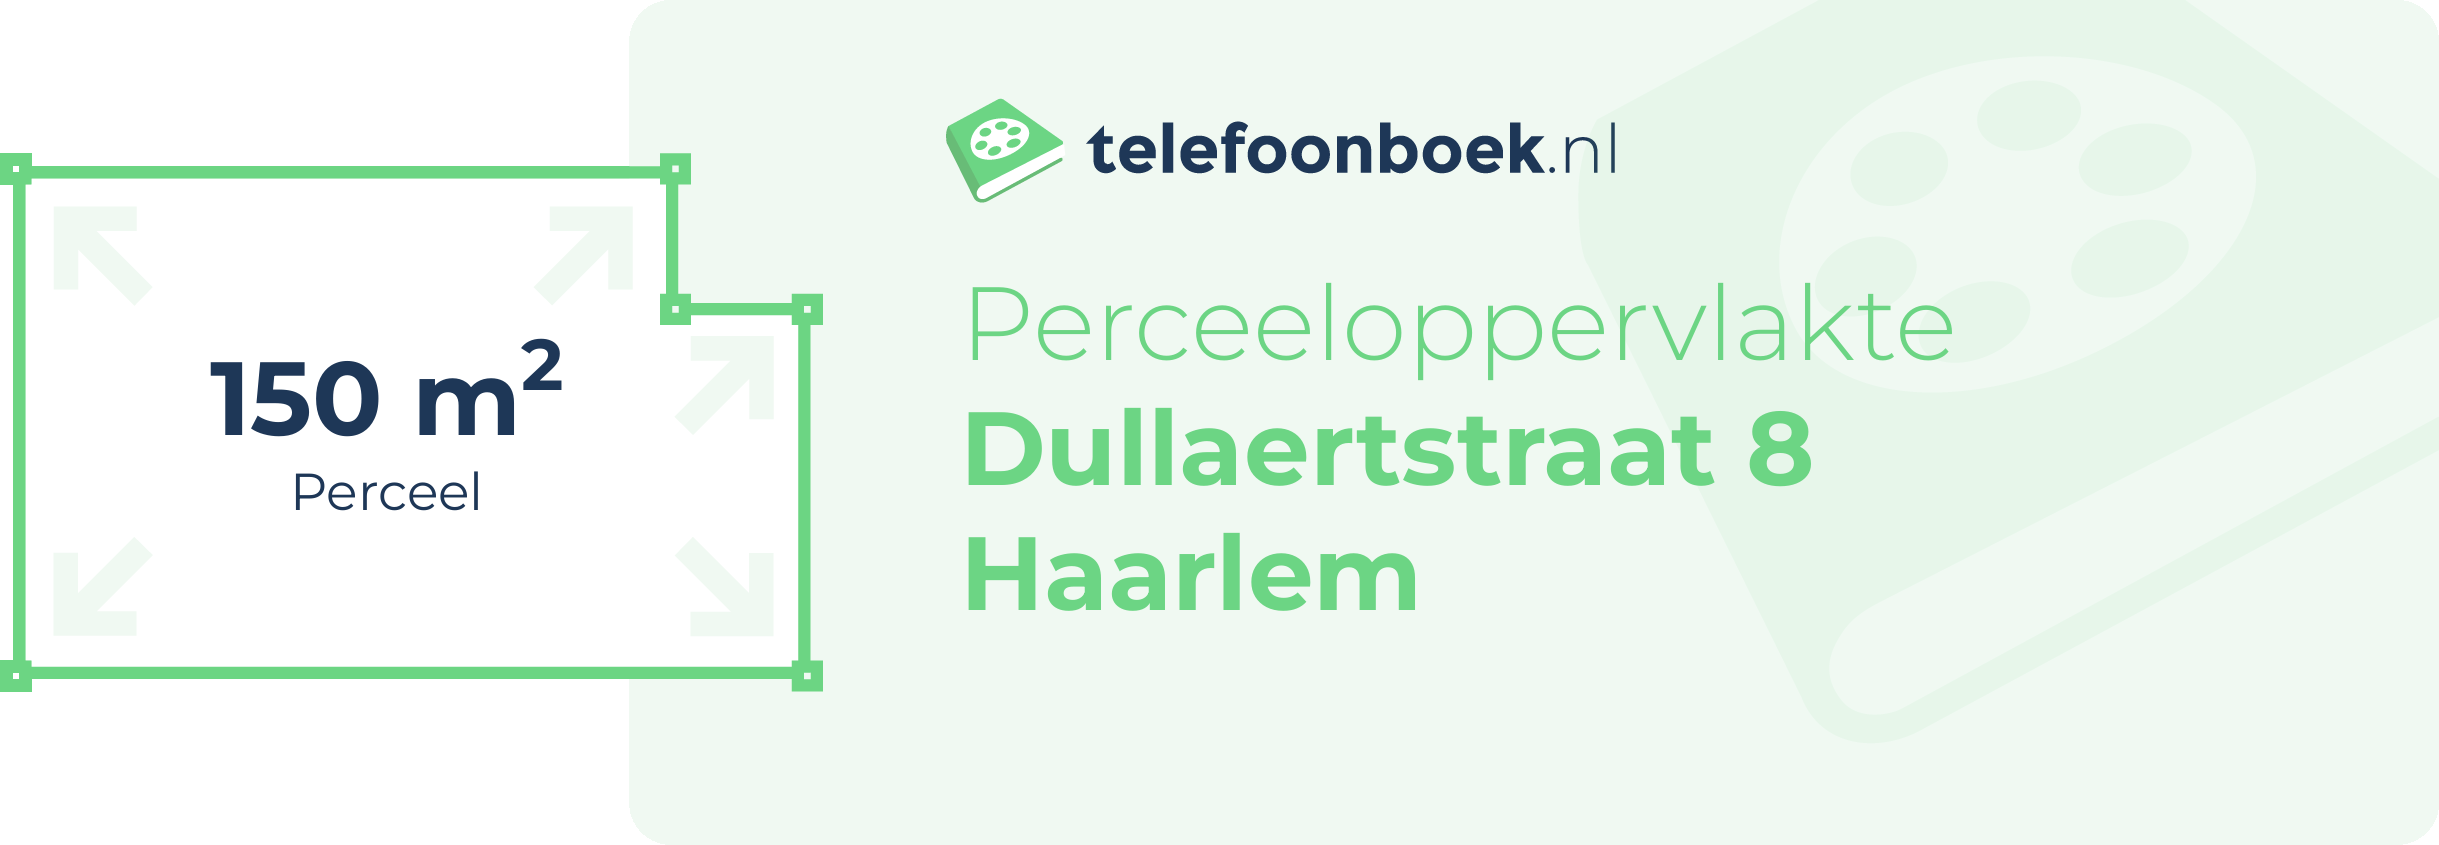 Perceeloppervlakte Dullaertstraat 8 Haarlem